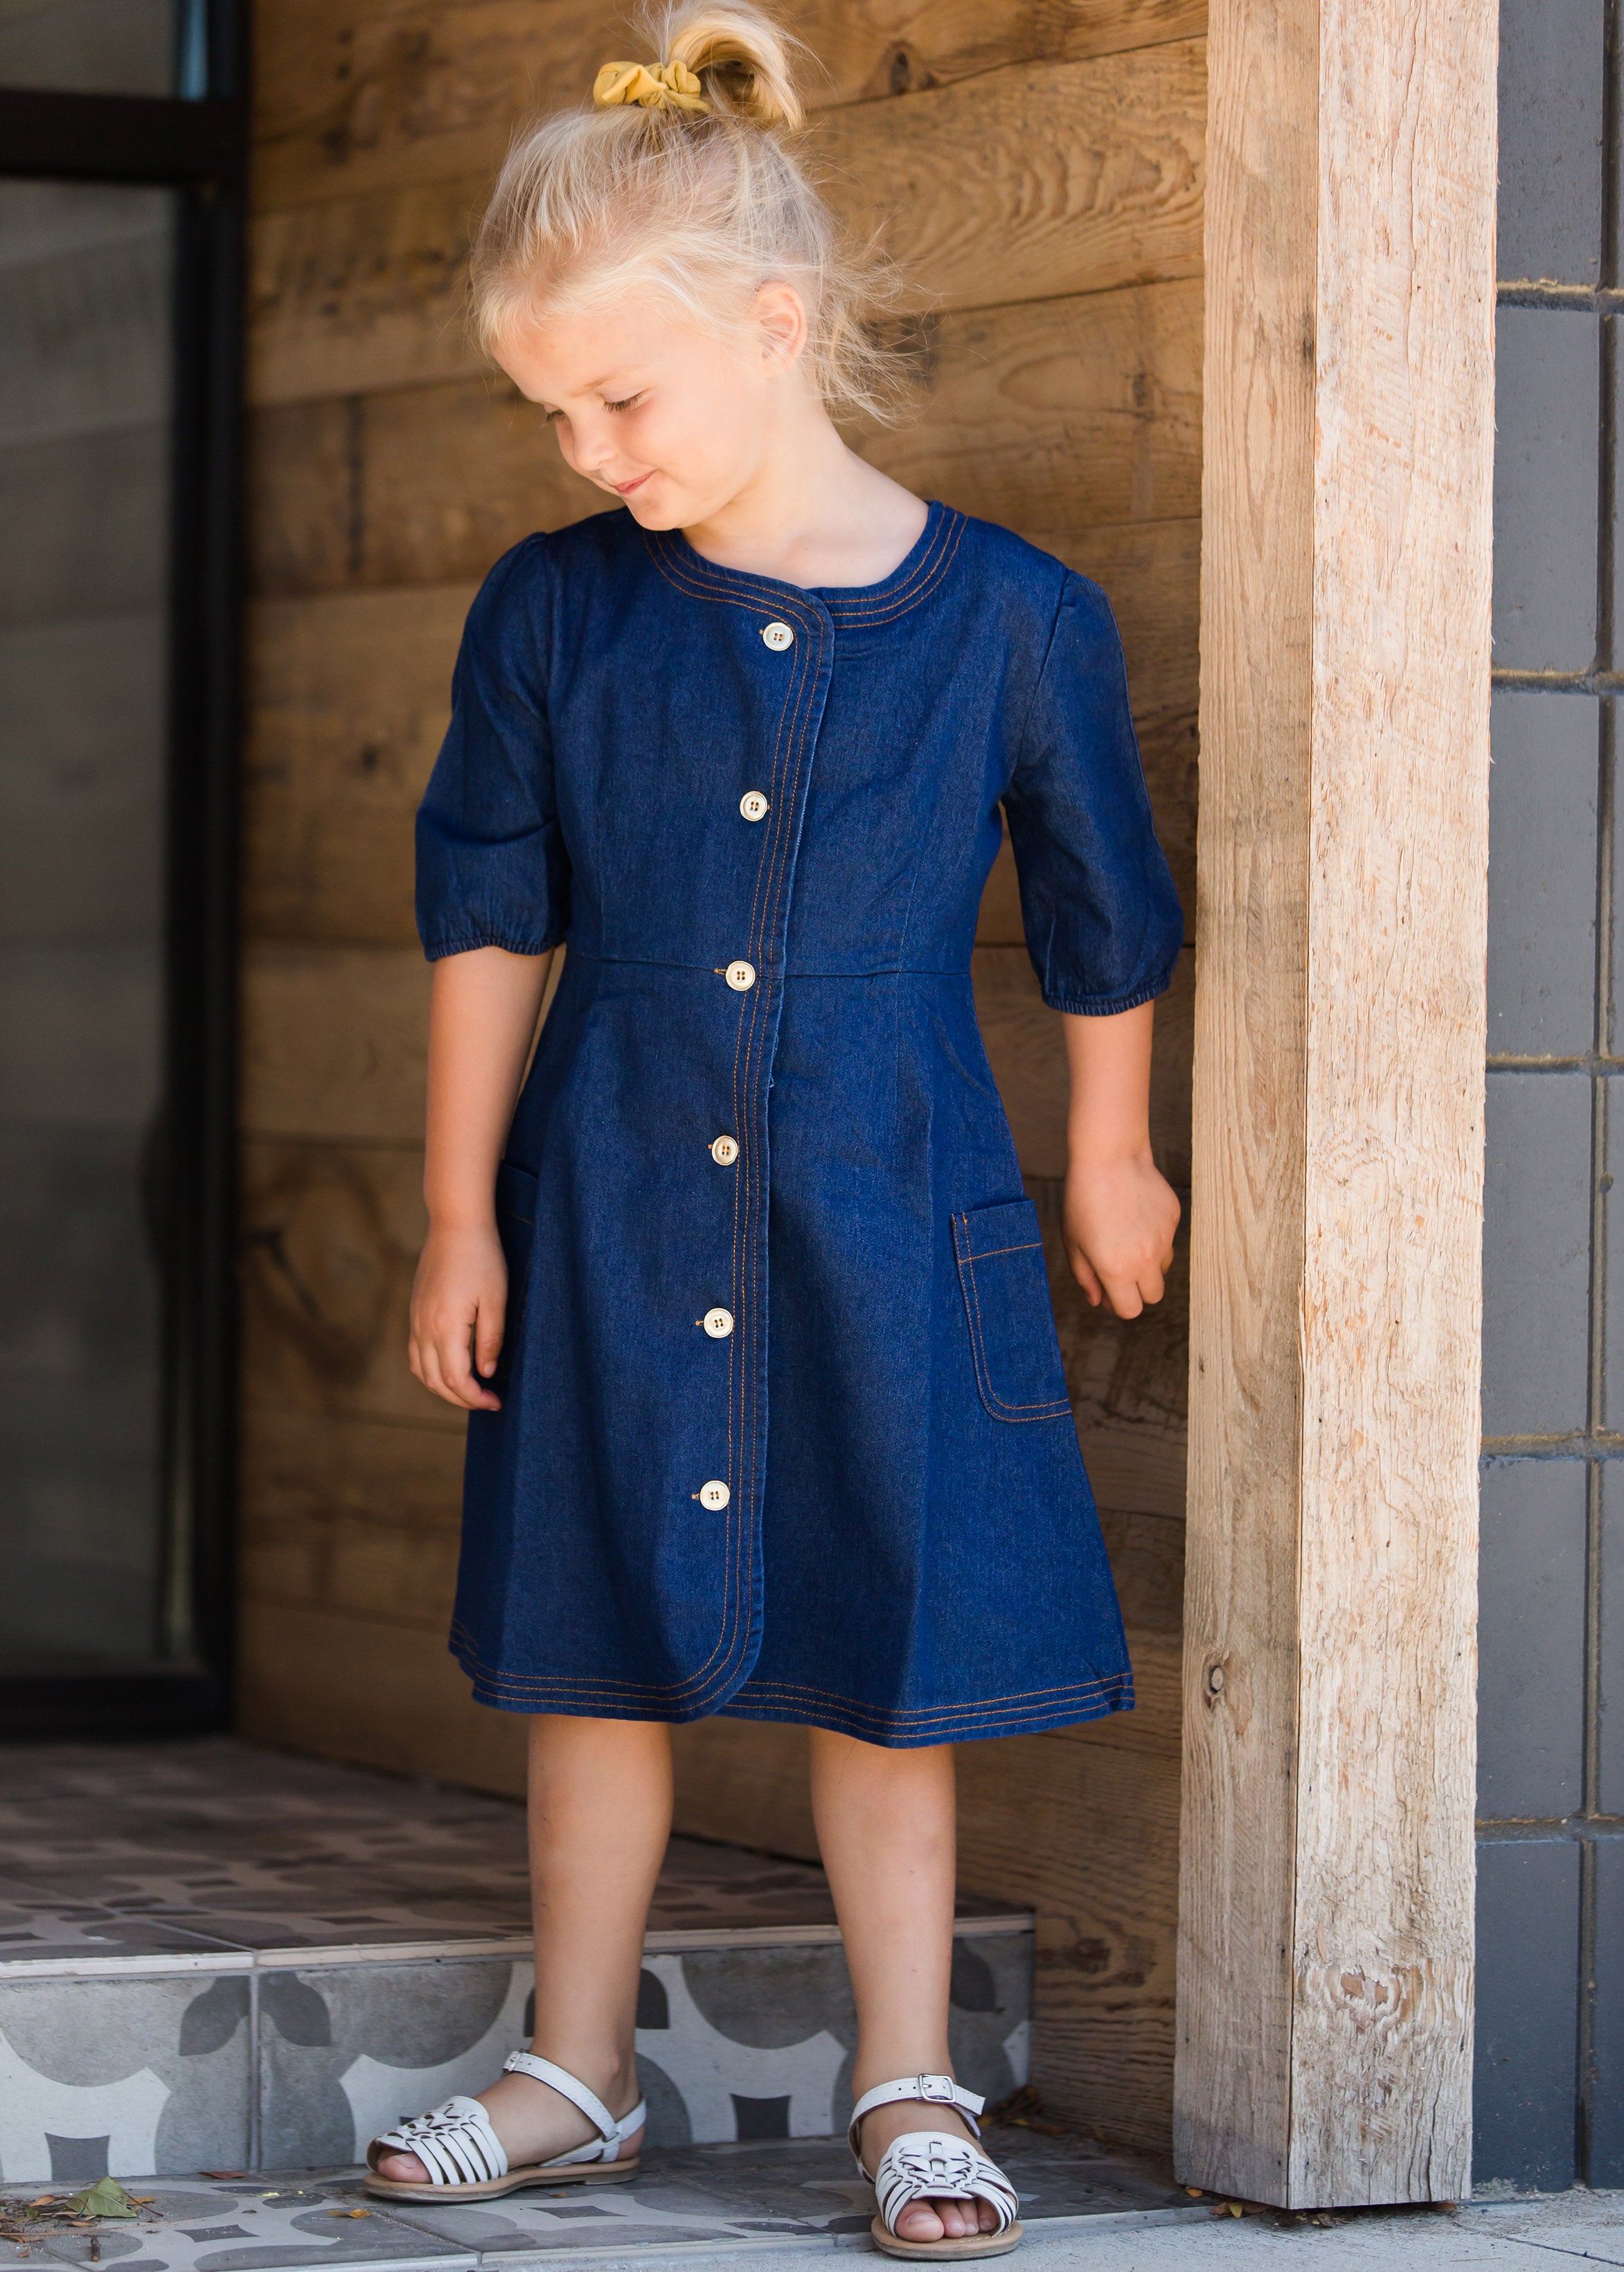 Toddler Girls' Old navy Denim Dress